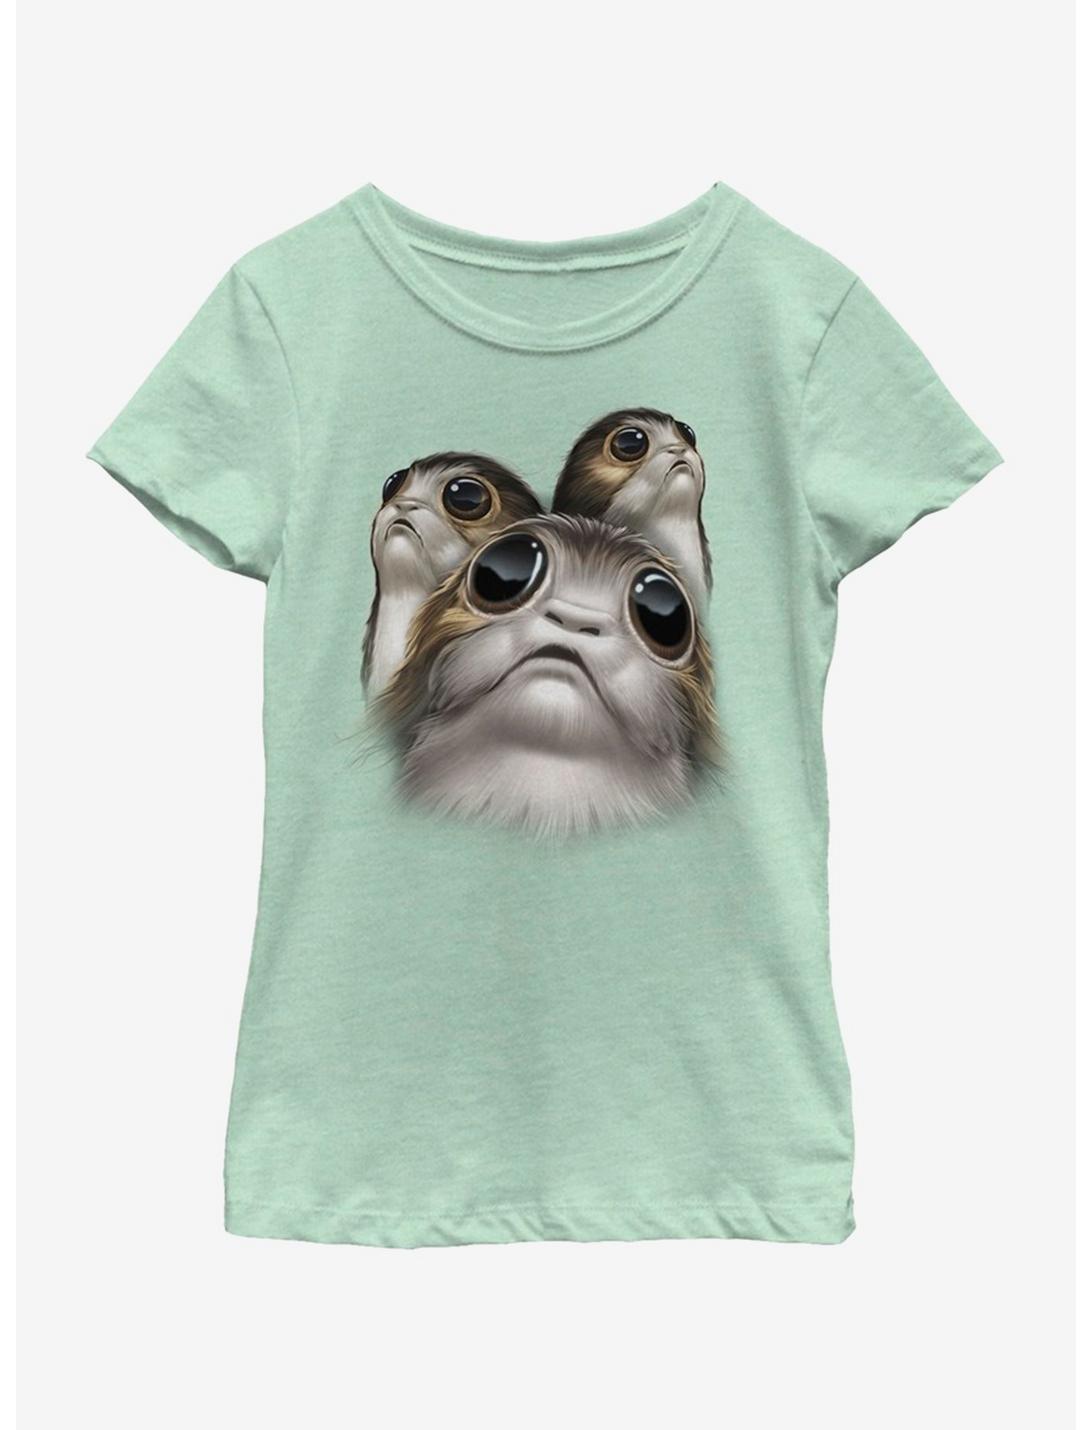 Star Wars The Last Jedi Big Face Porgs Youth Girls T-Shirt, MINT, hi-res